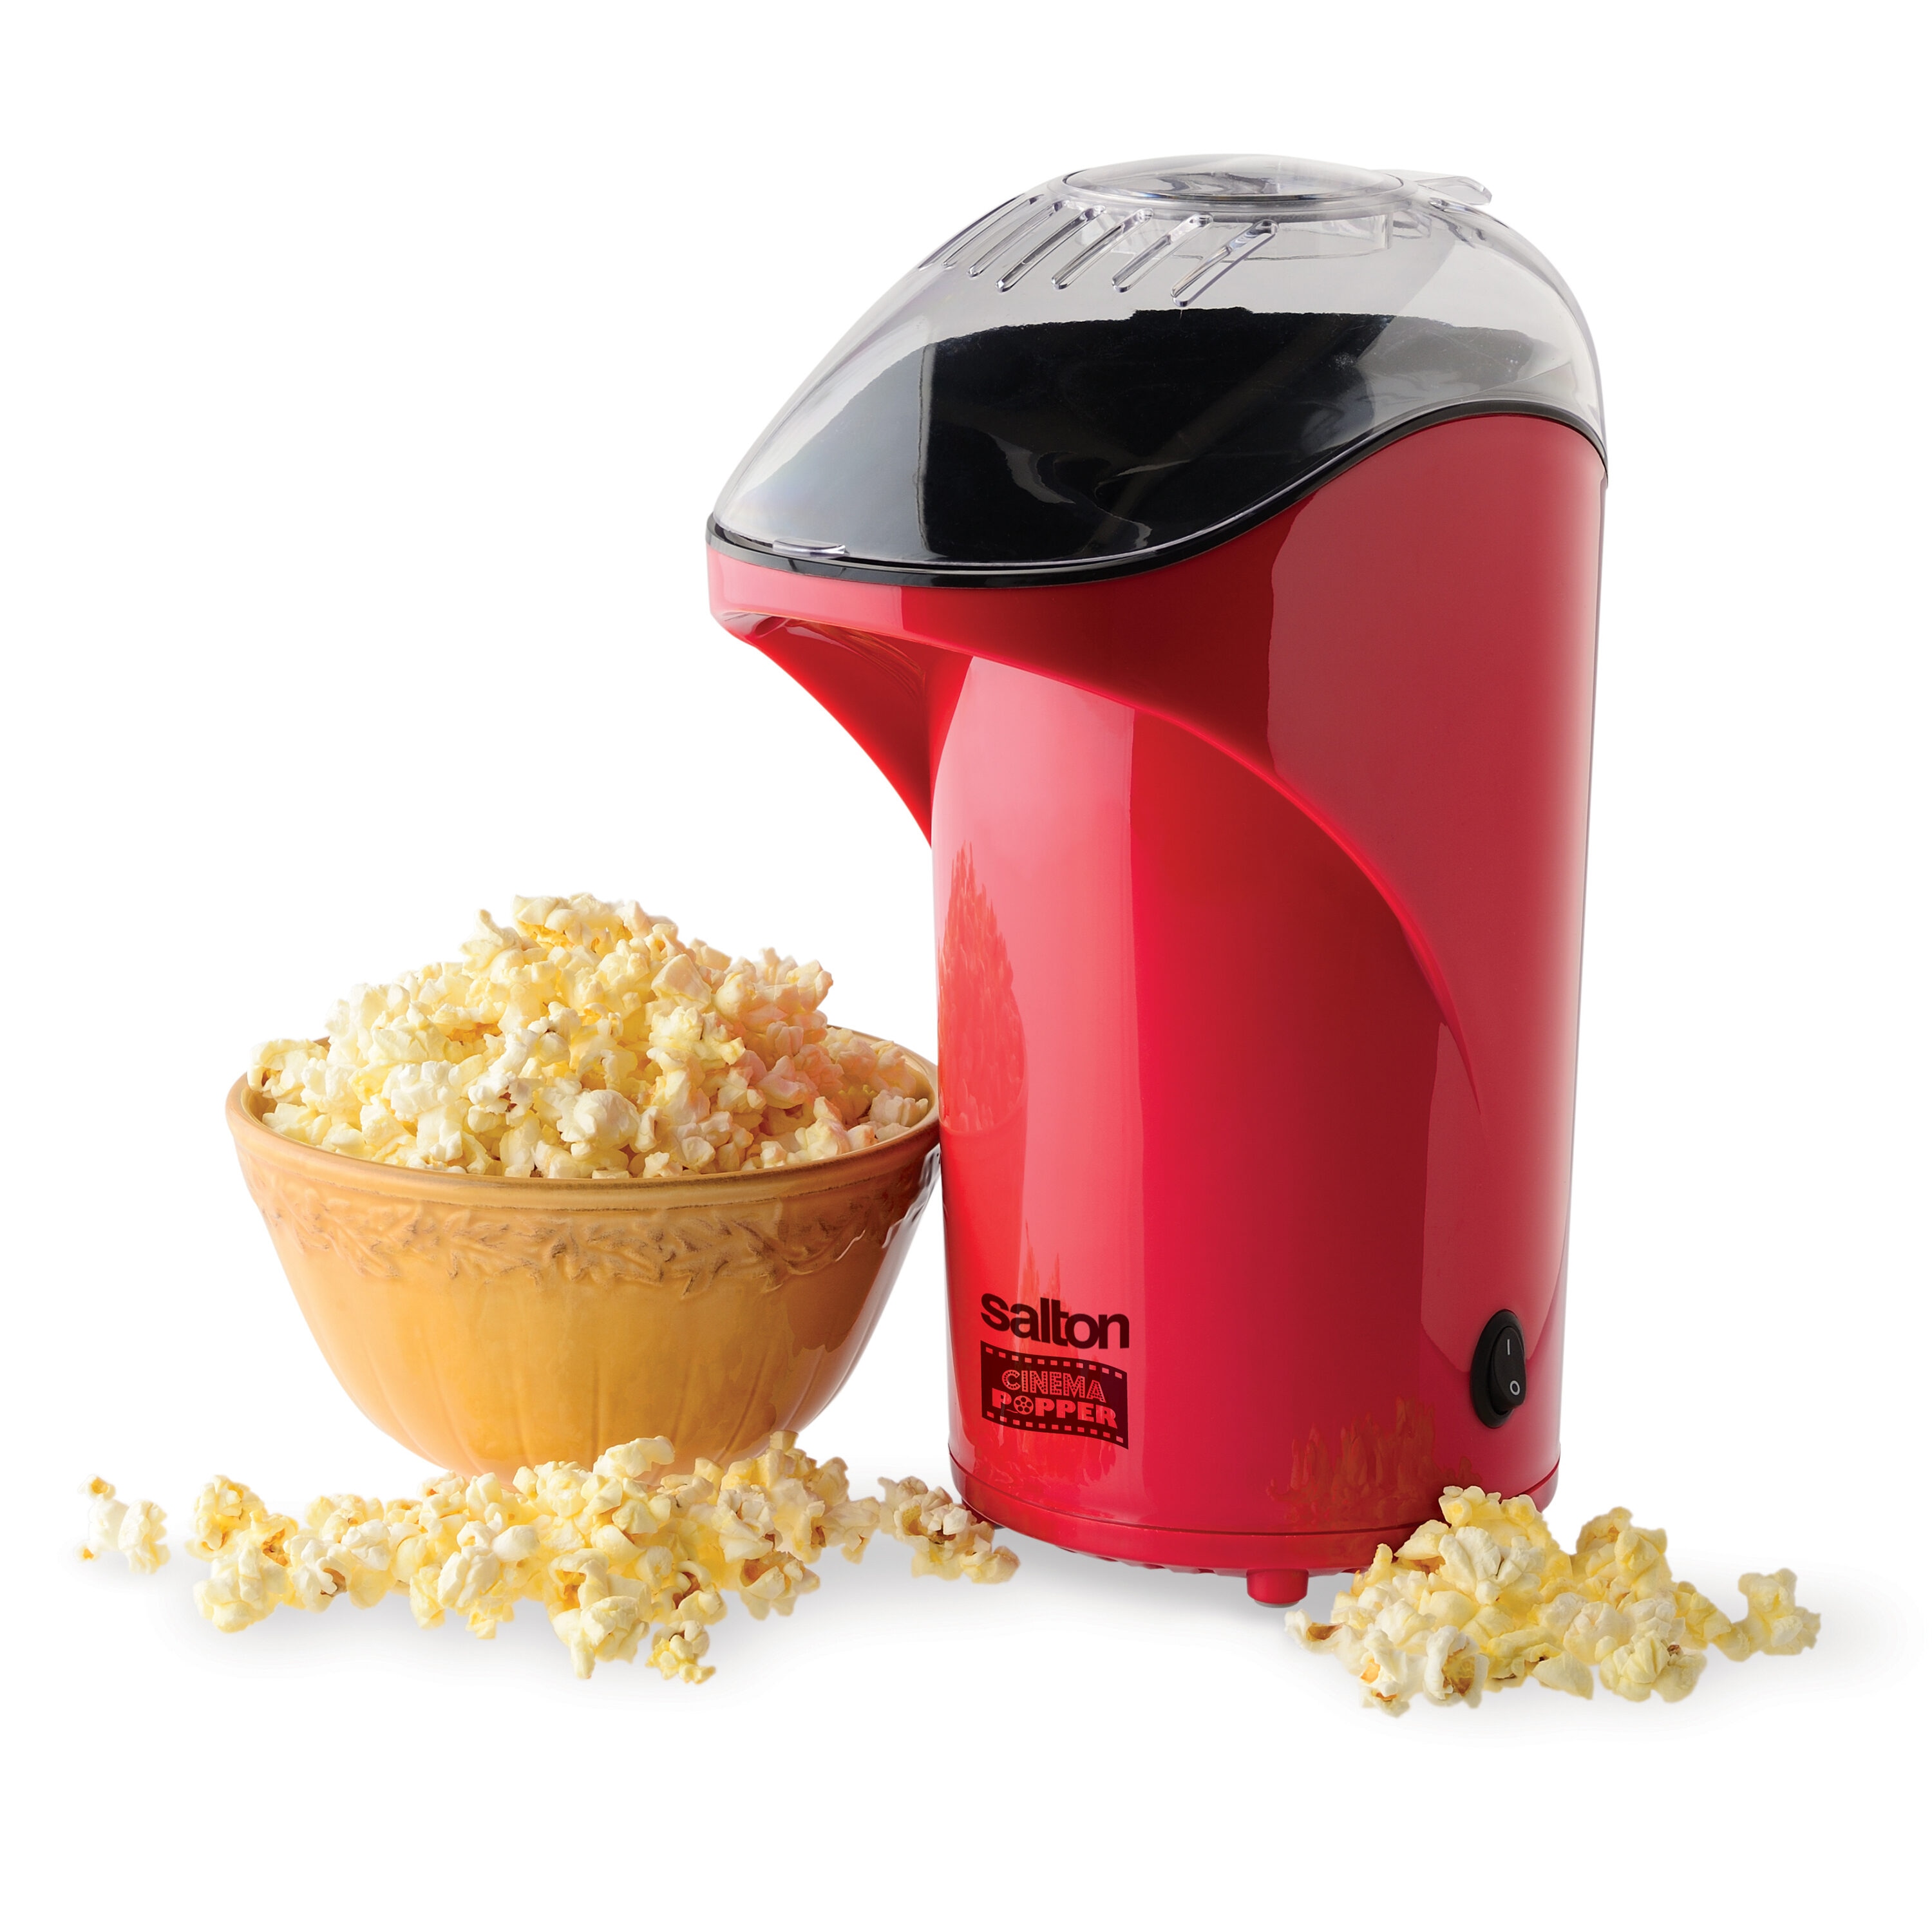  1200W Fast Hot Air Popcorn Popper - 4.5 Quarts